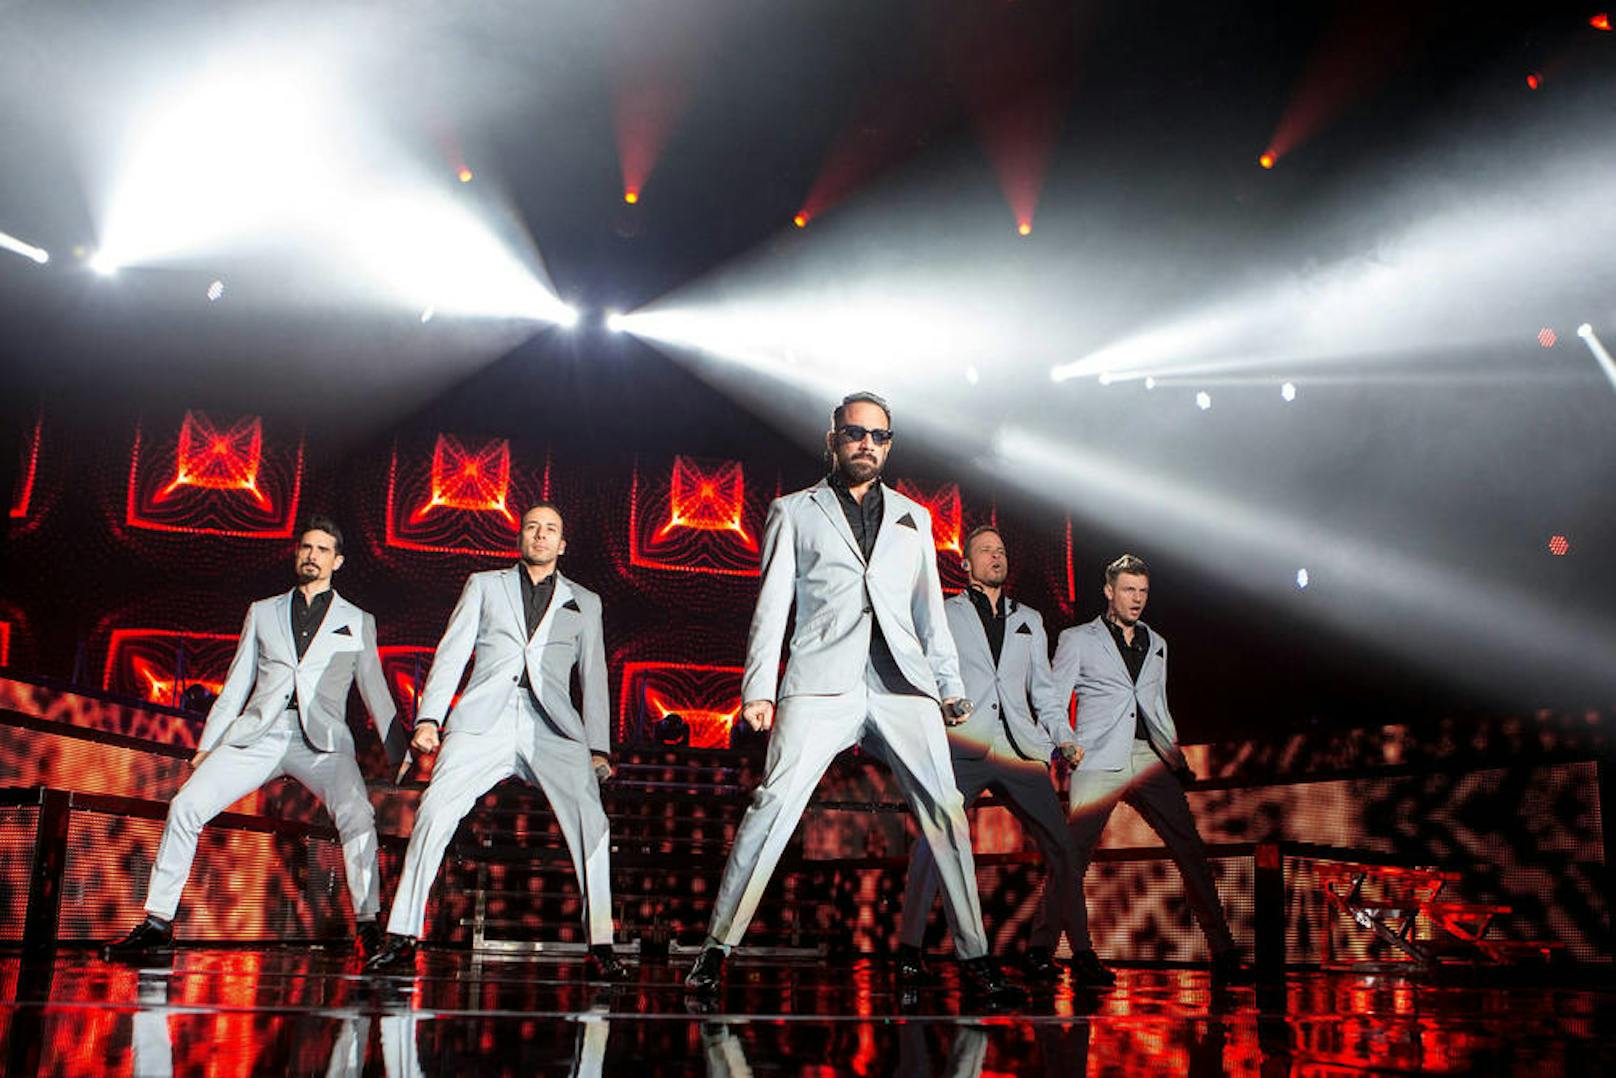 Die Backstreet Boys live in Manchester, April 2014